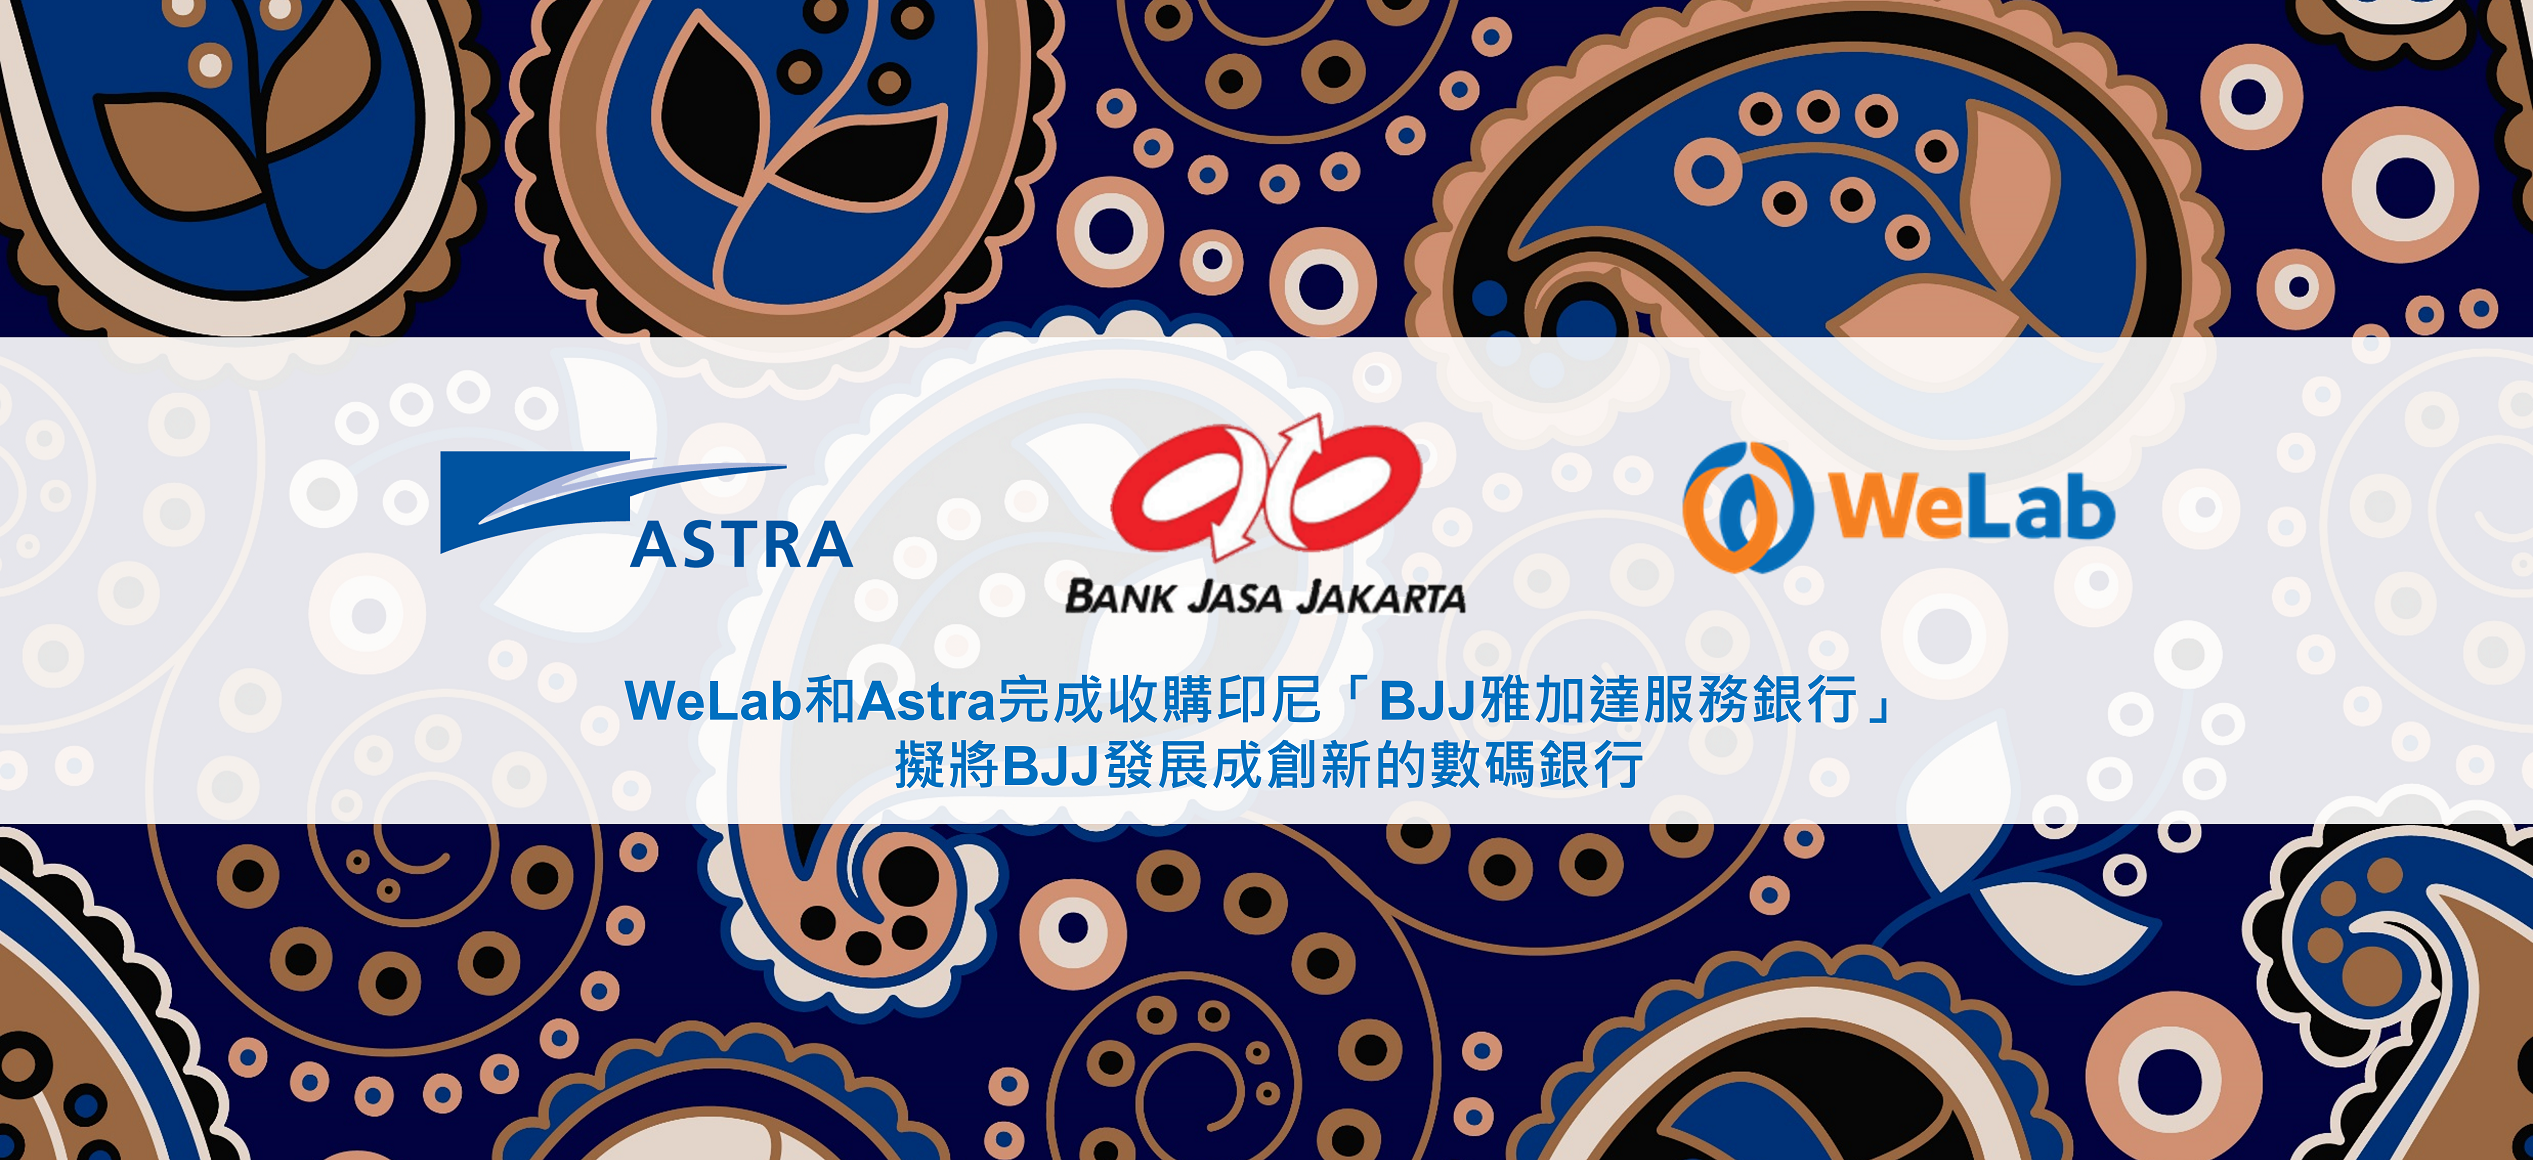 WeLab和Astra完成收購印尼「BJJ雅加達服務銀行」